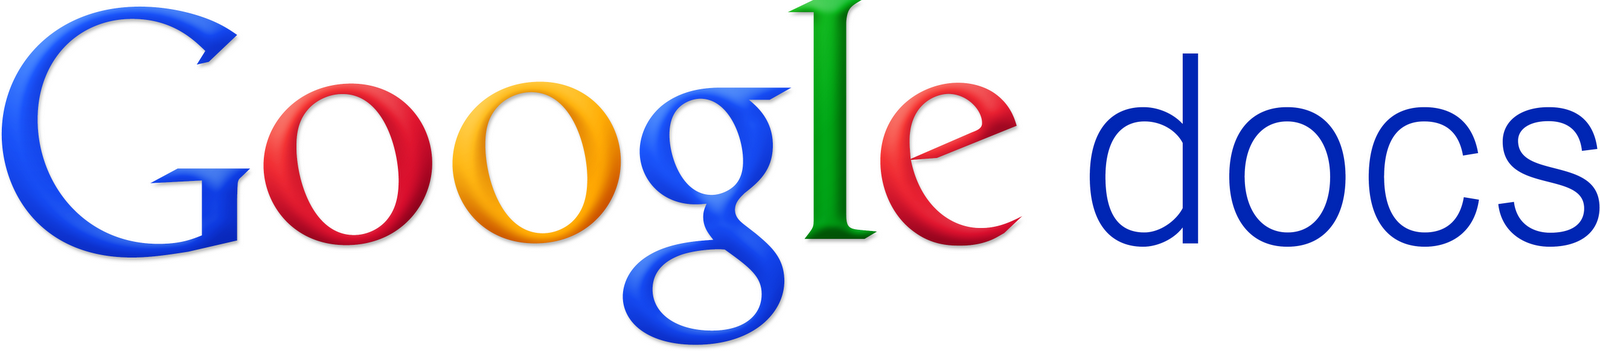 Google_Docs_Logo.png